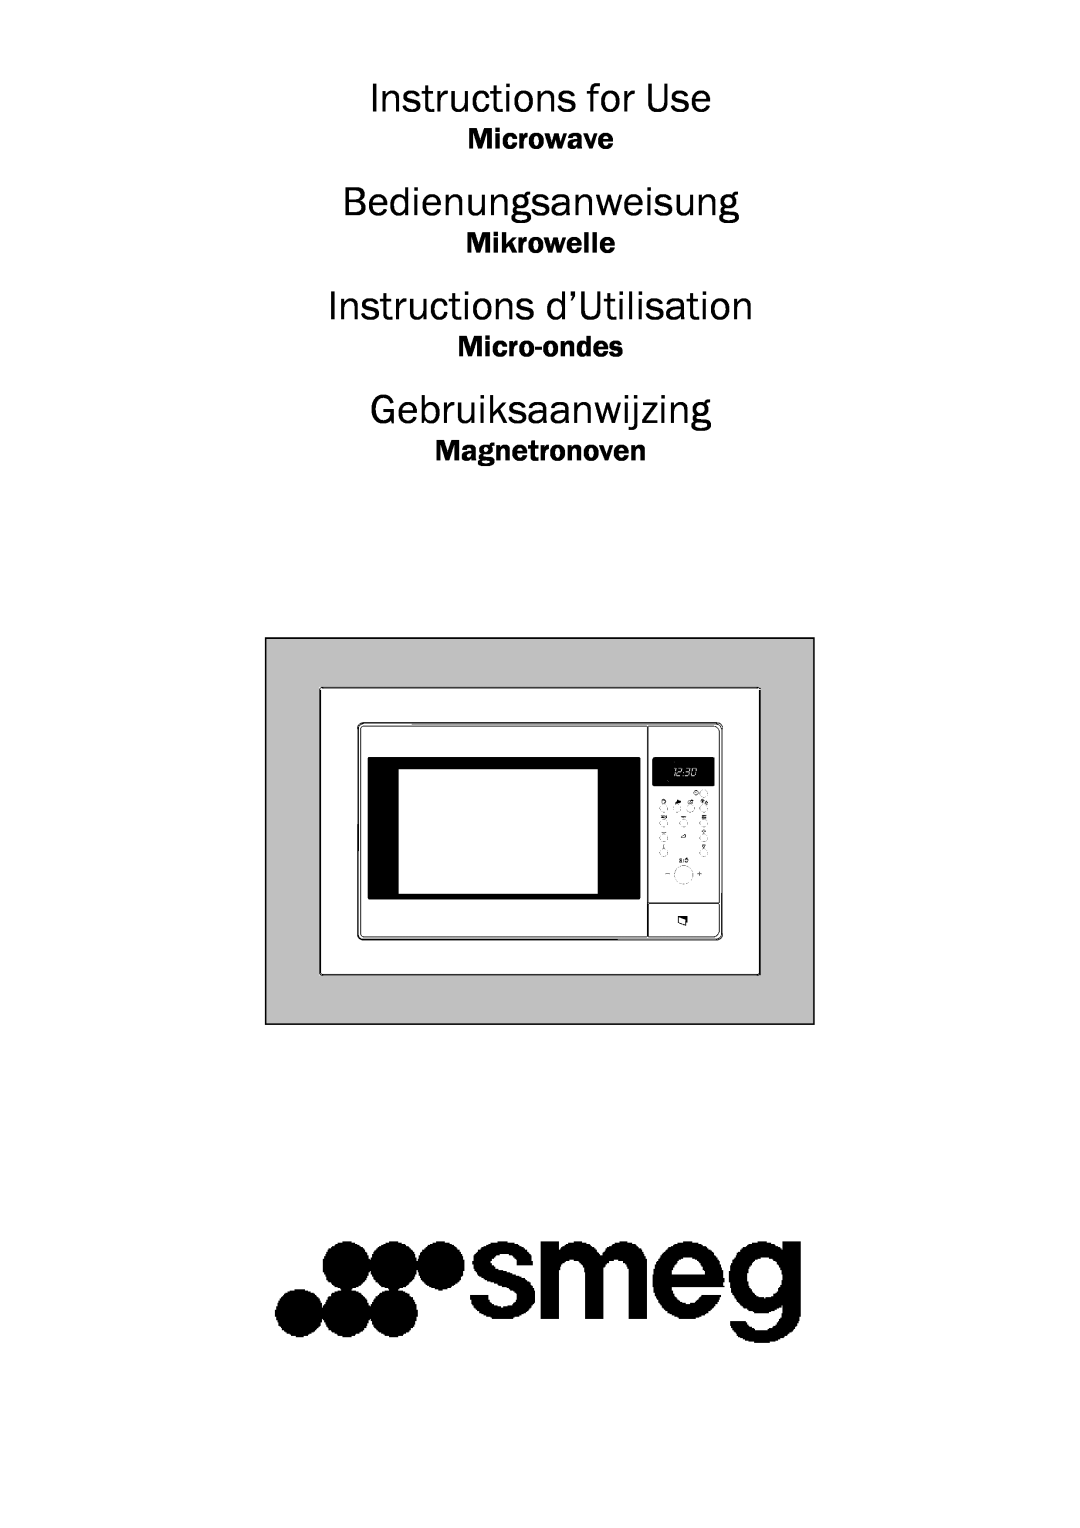 Smeg FME20EX1 manual Instructions for Use, Bedienungsanweisung, Instructions d’Utilisation, Gebruiksaanwijzing, Microwave 